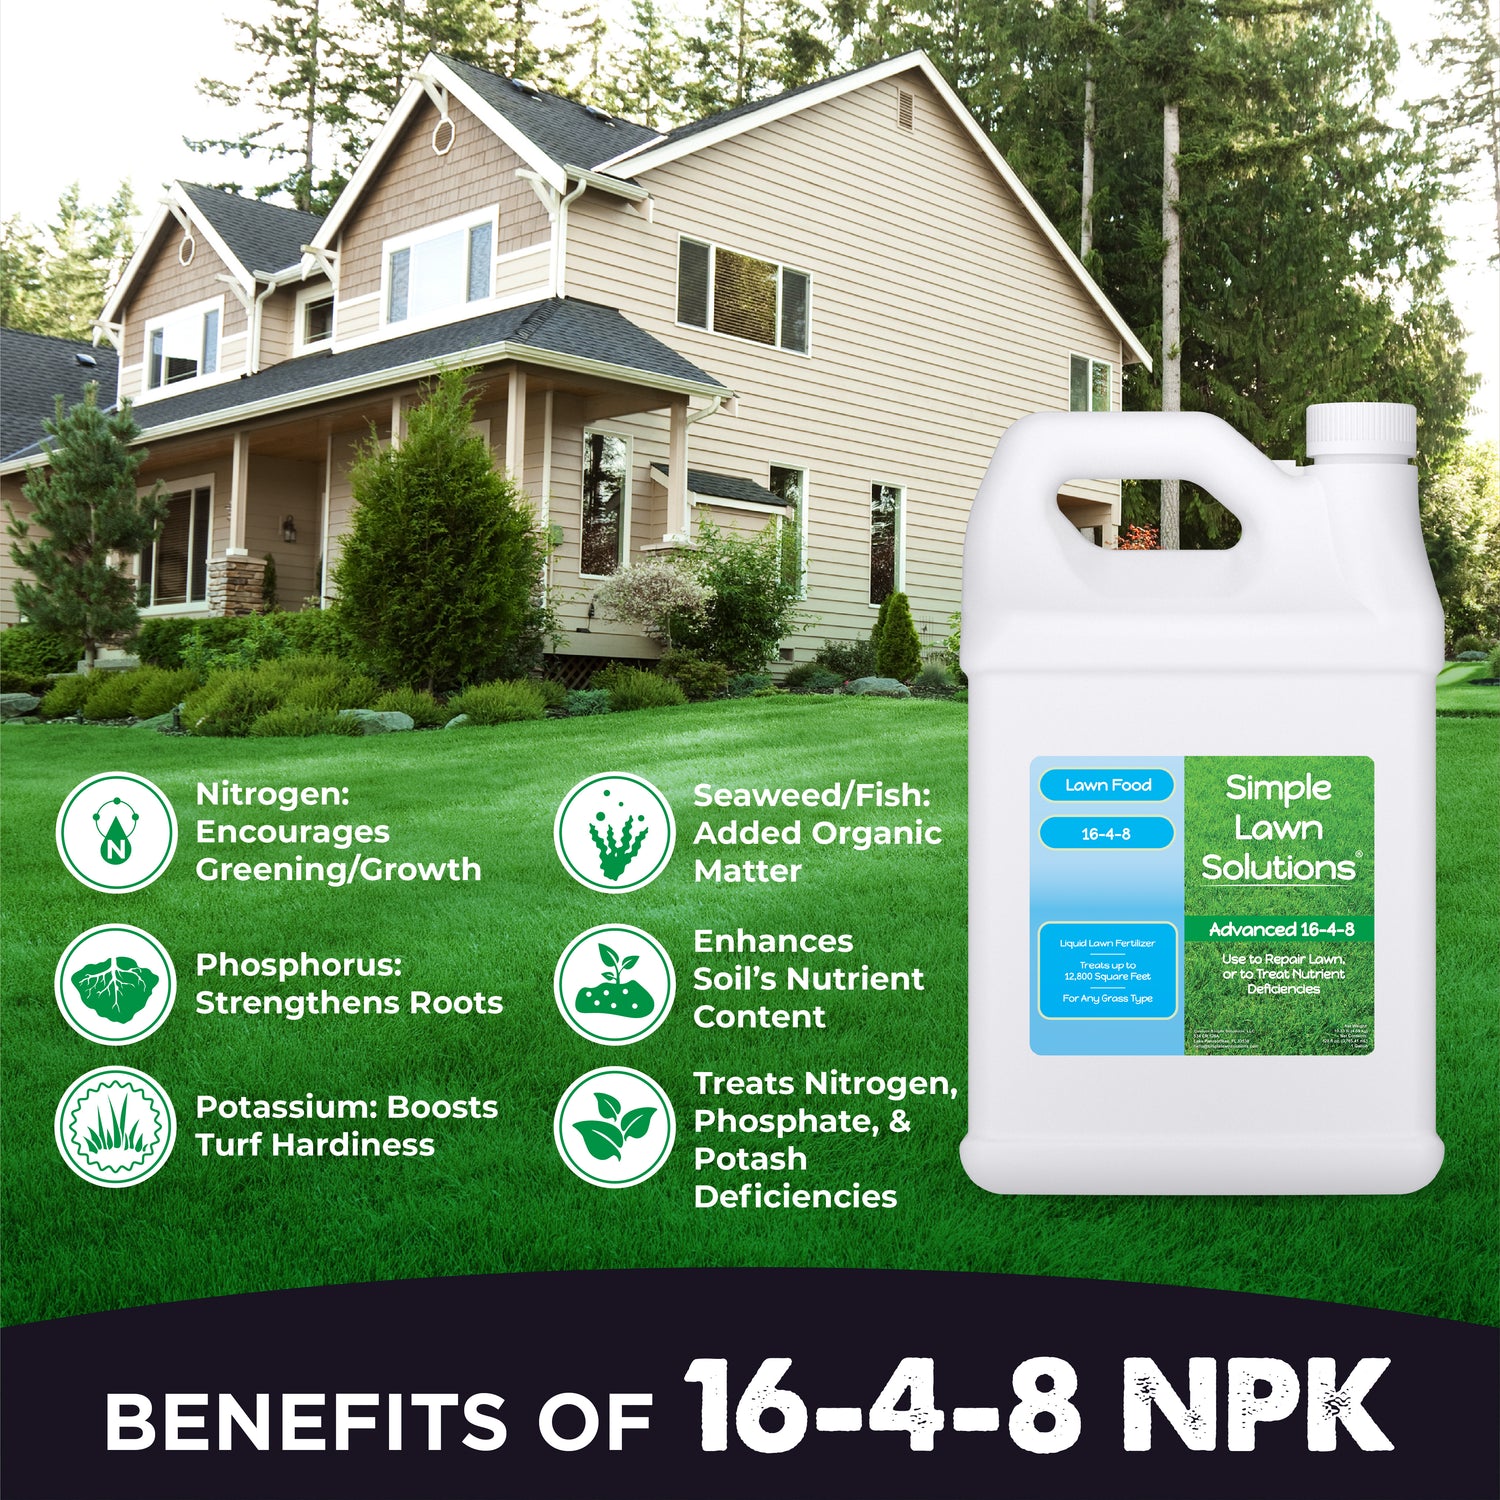 Benefits of lawn fertilizer